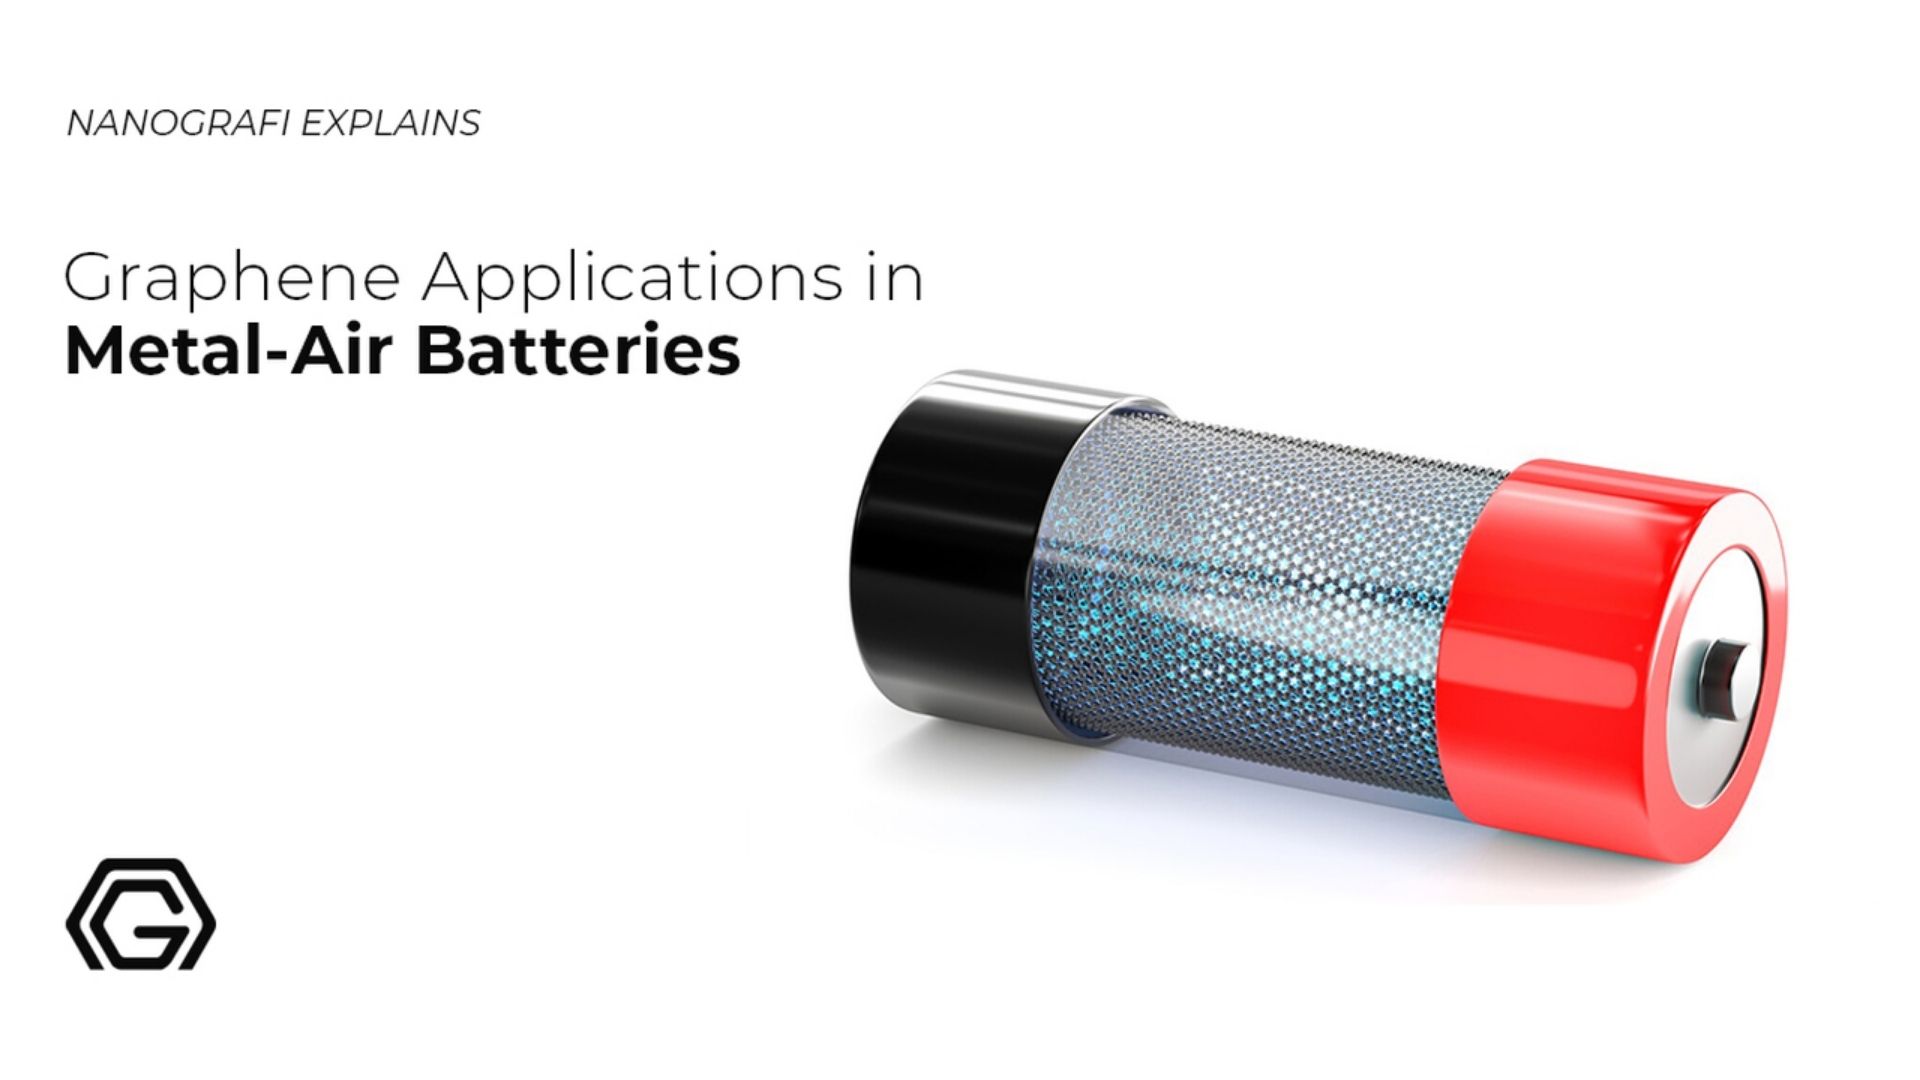 Graphene application in metal-air batteries